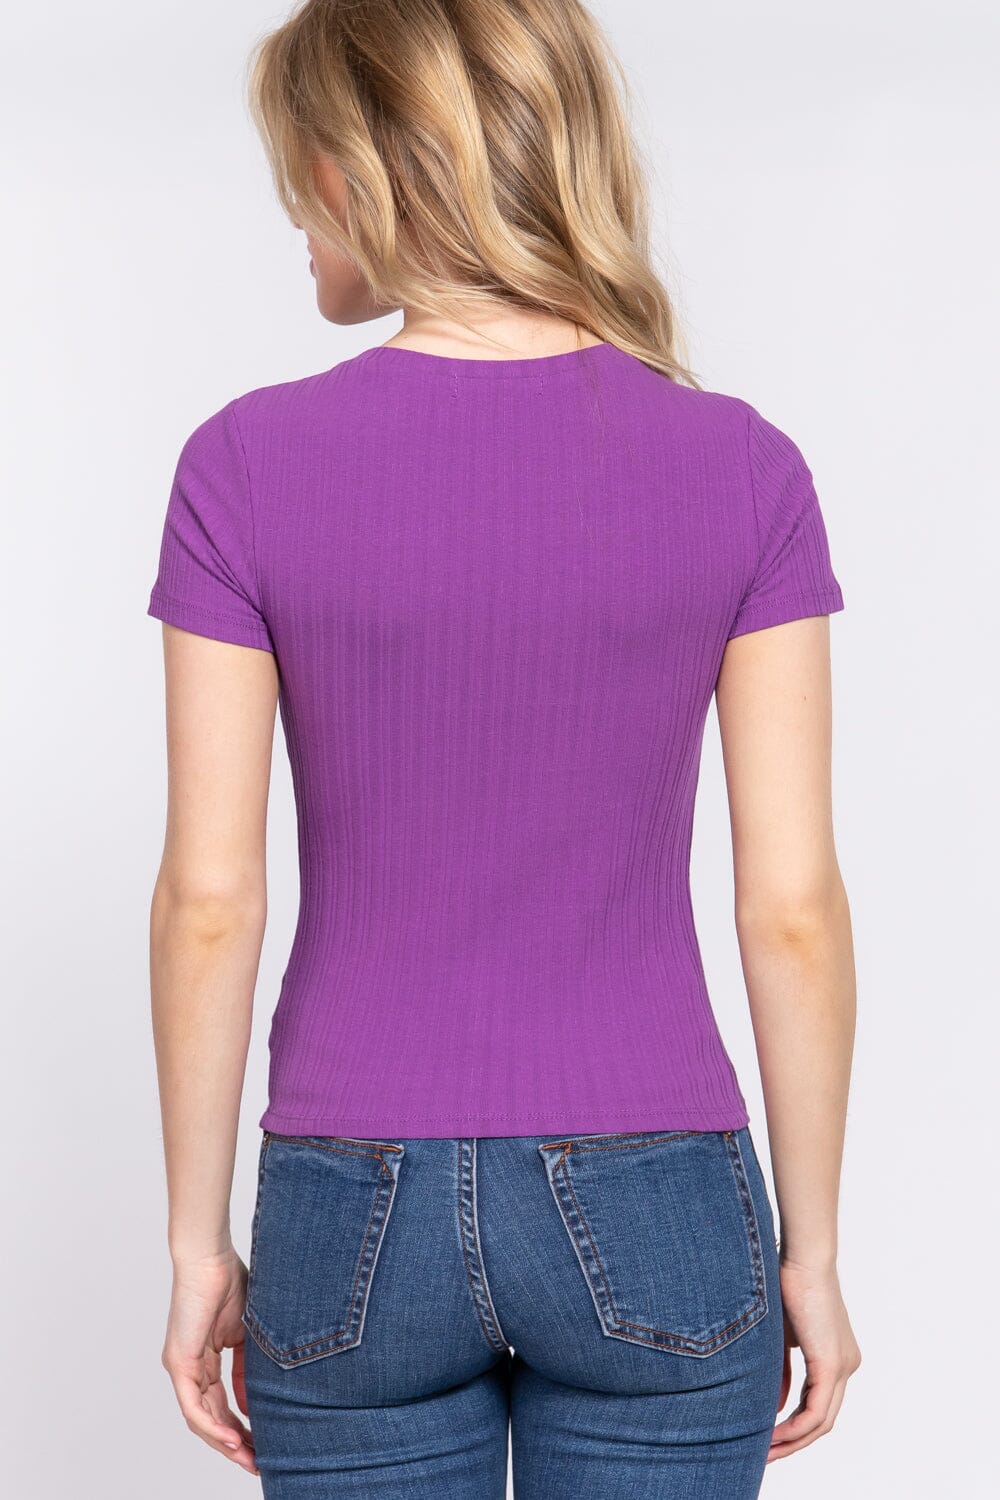 Purple Basic Casual Short Sleeve Crew Neck Variegated Rib Knit Top Shirts & Tops jehouze 